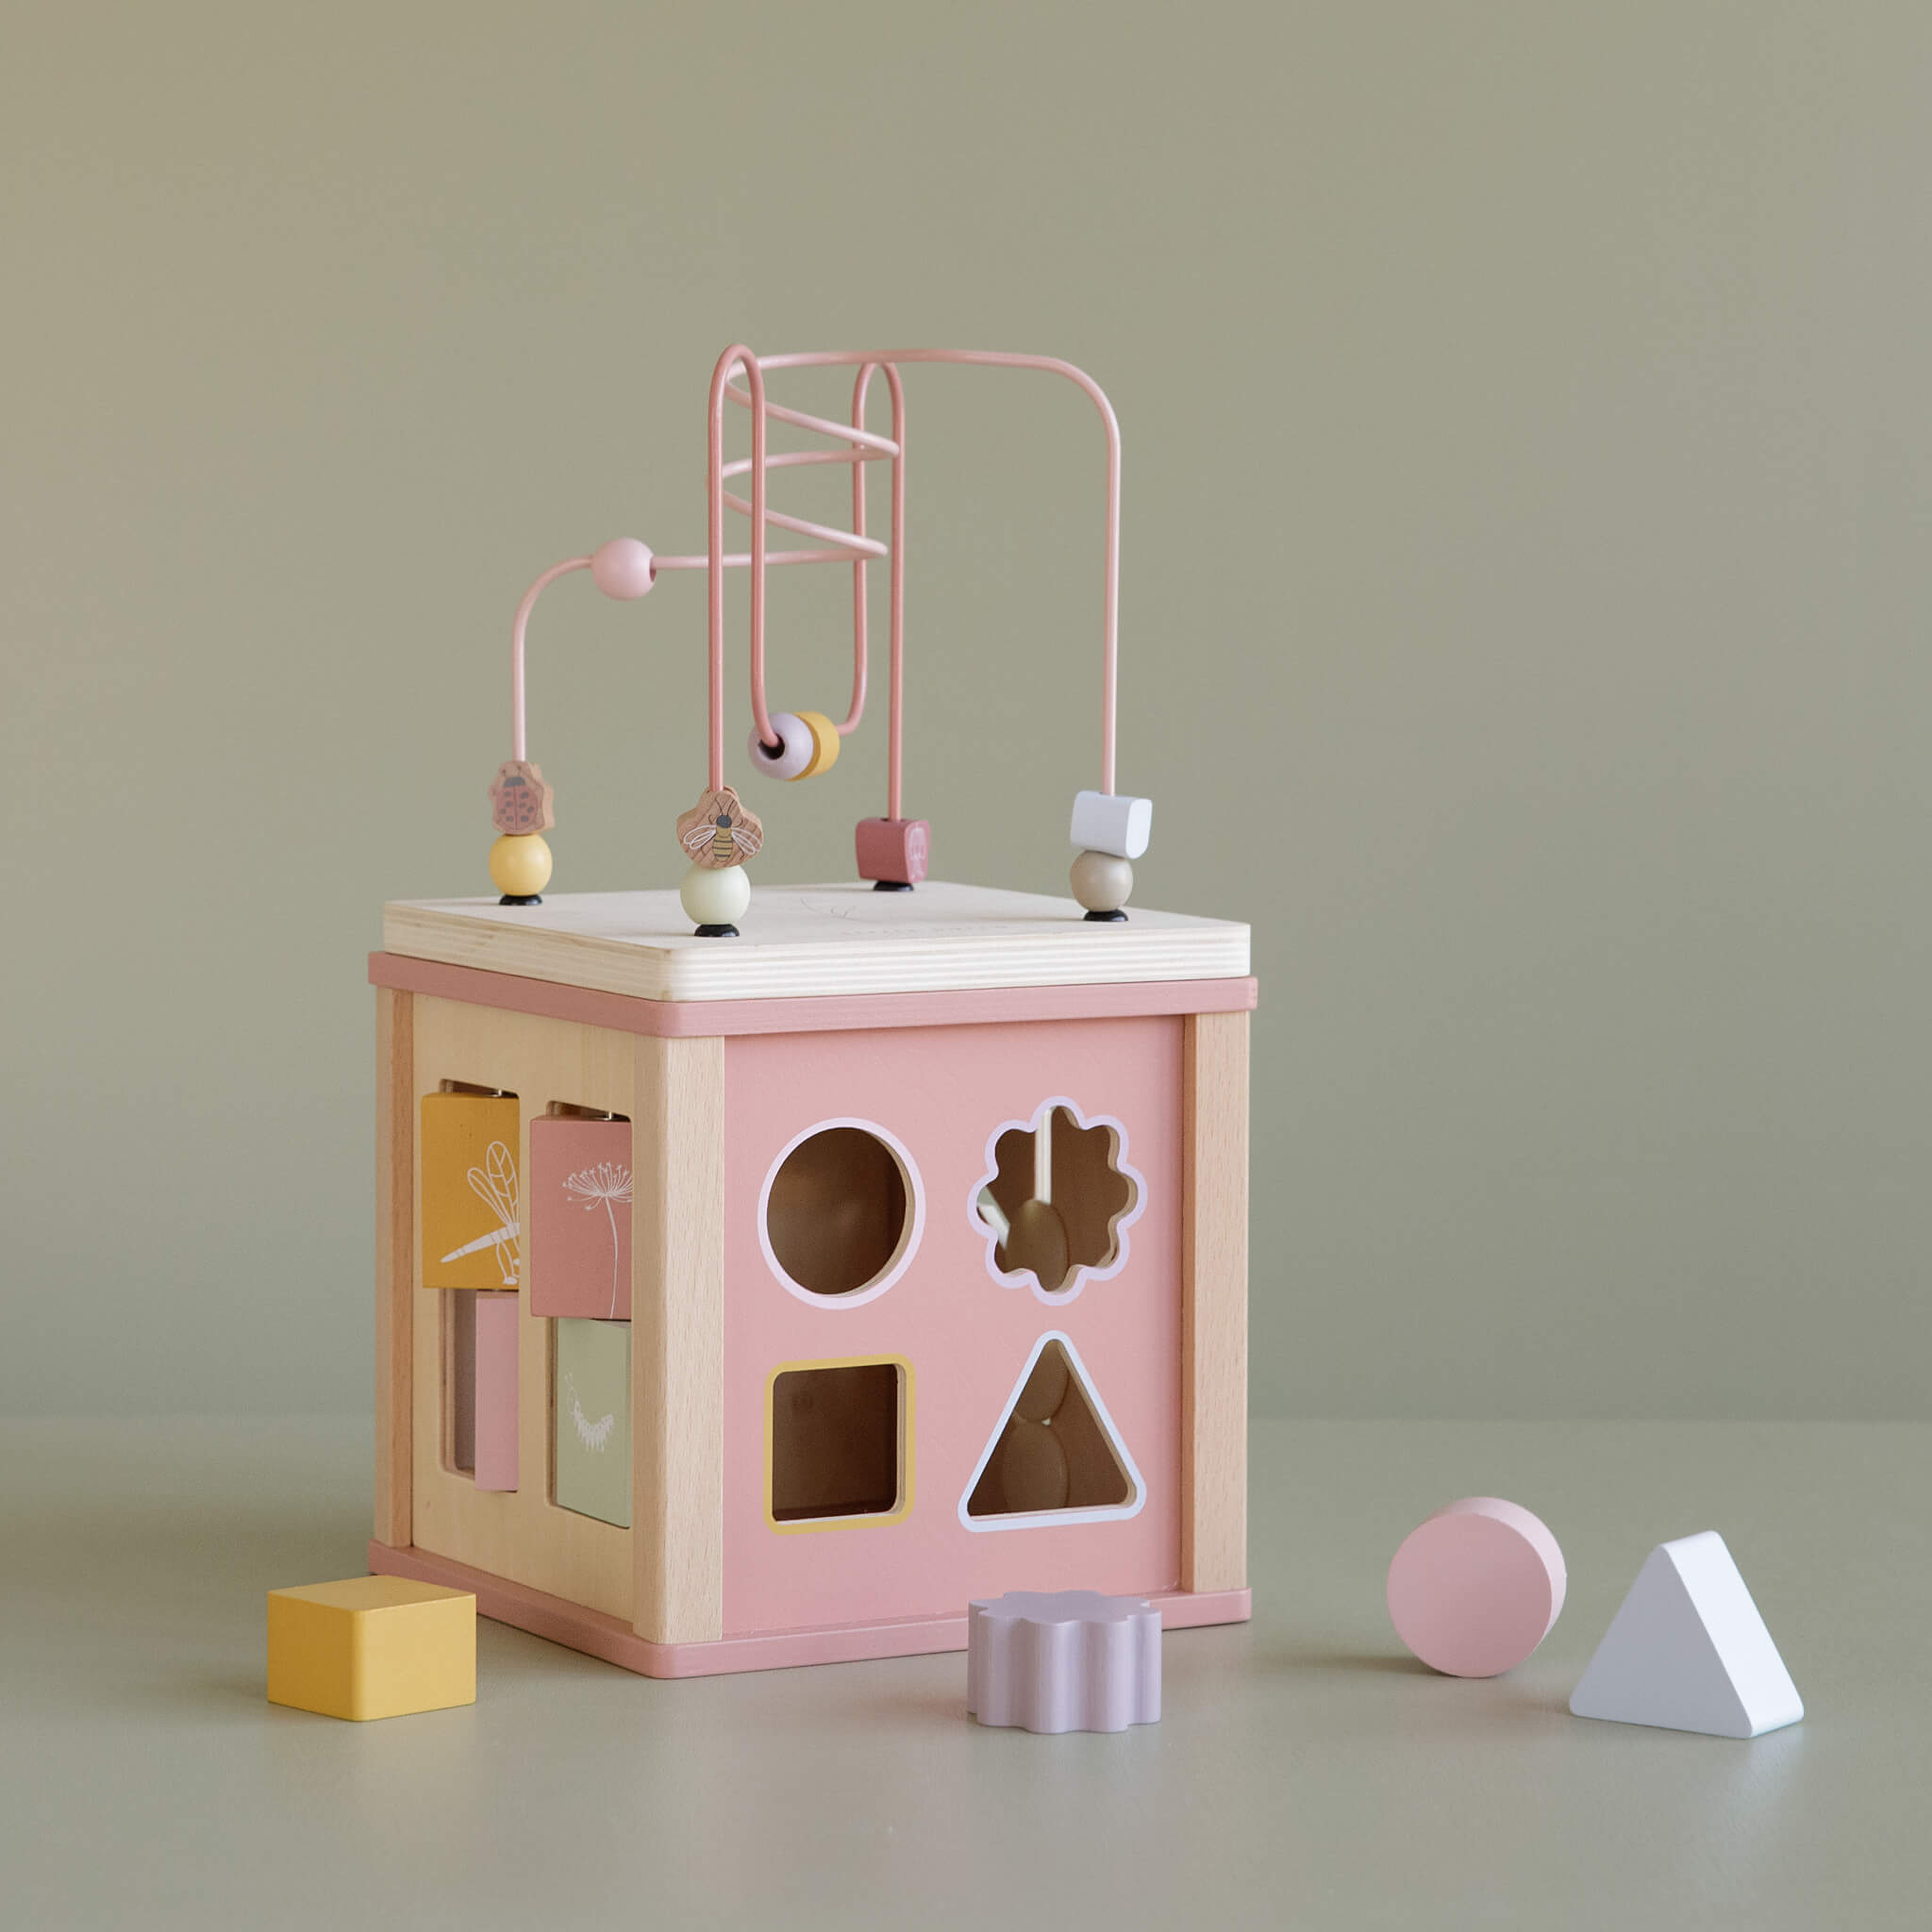 Little Dutch Wooden Activity Cube Toy in Wild Flowers Design